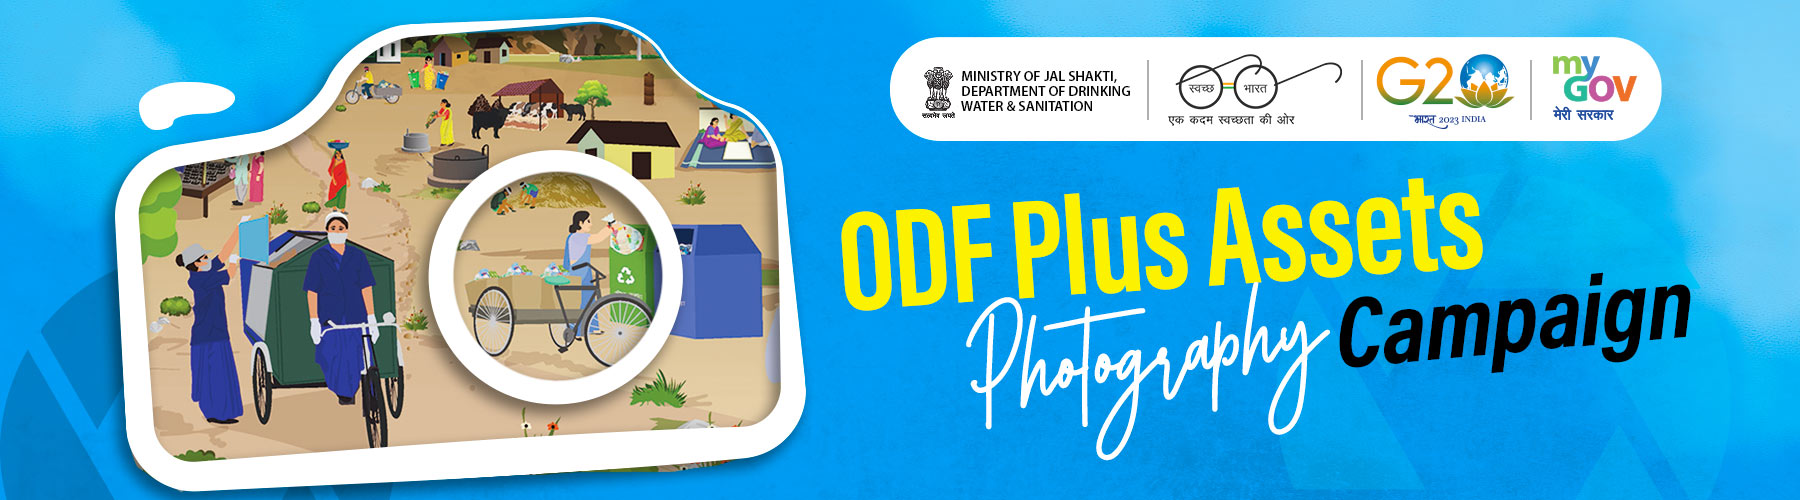 ODF प्लस एसेट्स फोटोग्राफी अभियान